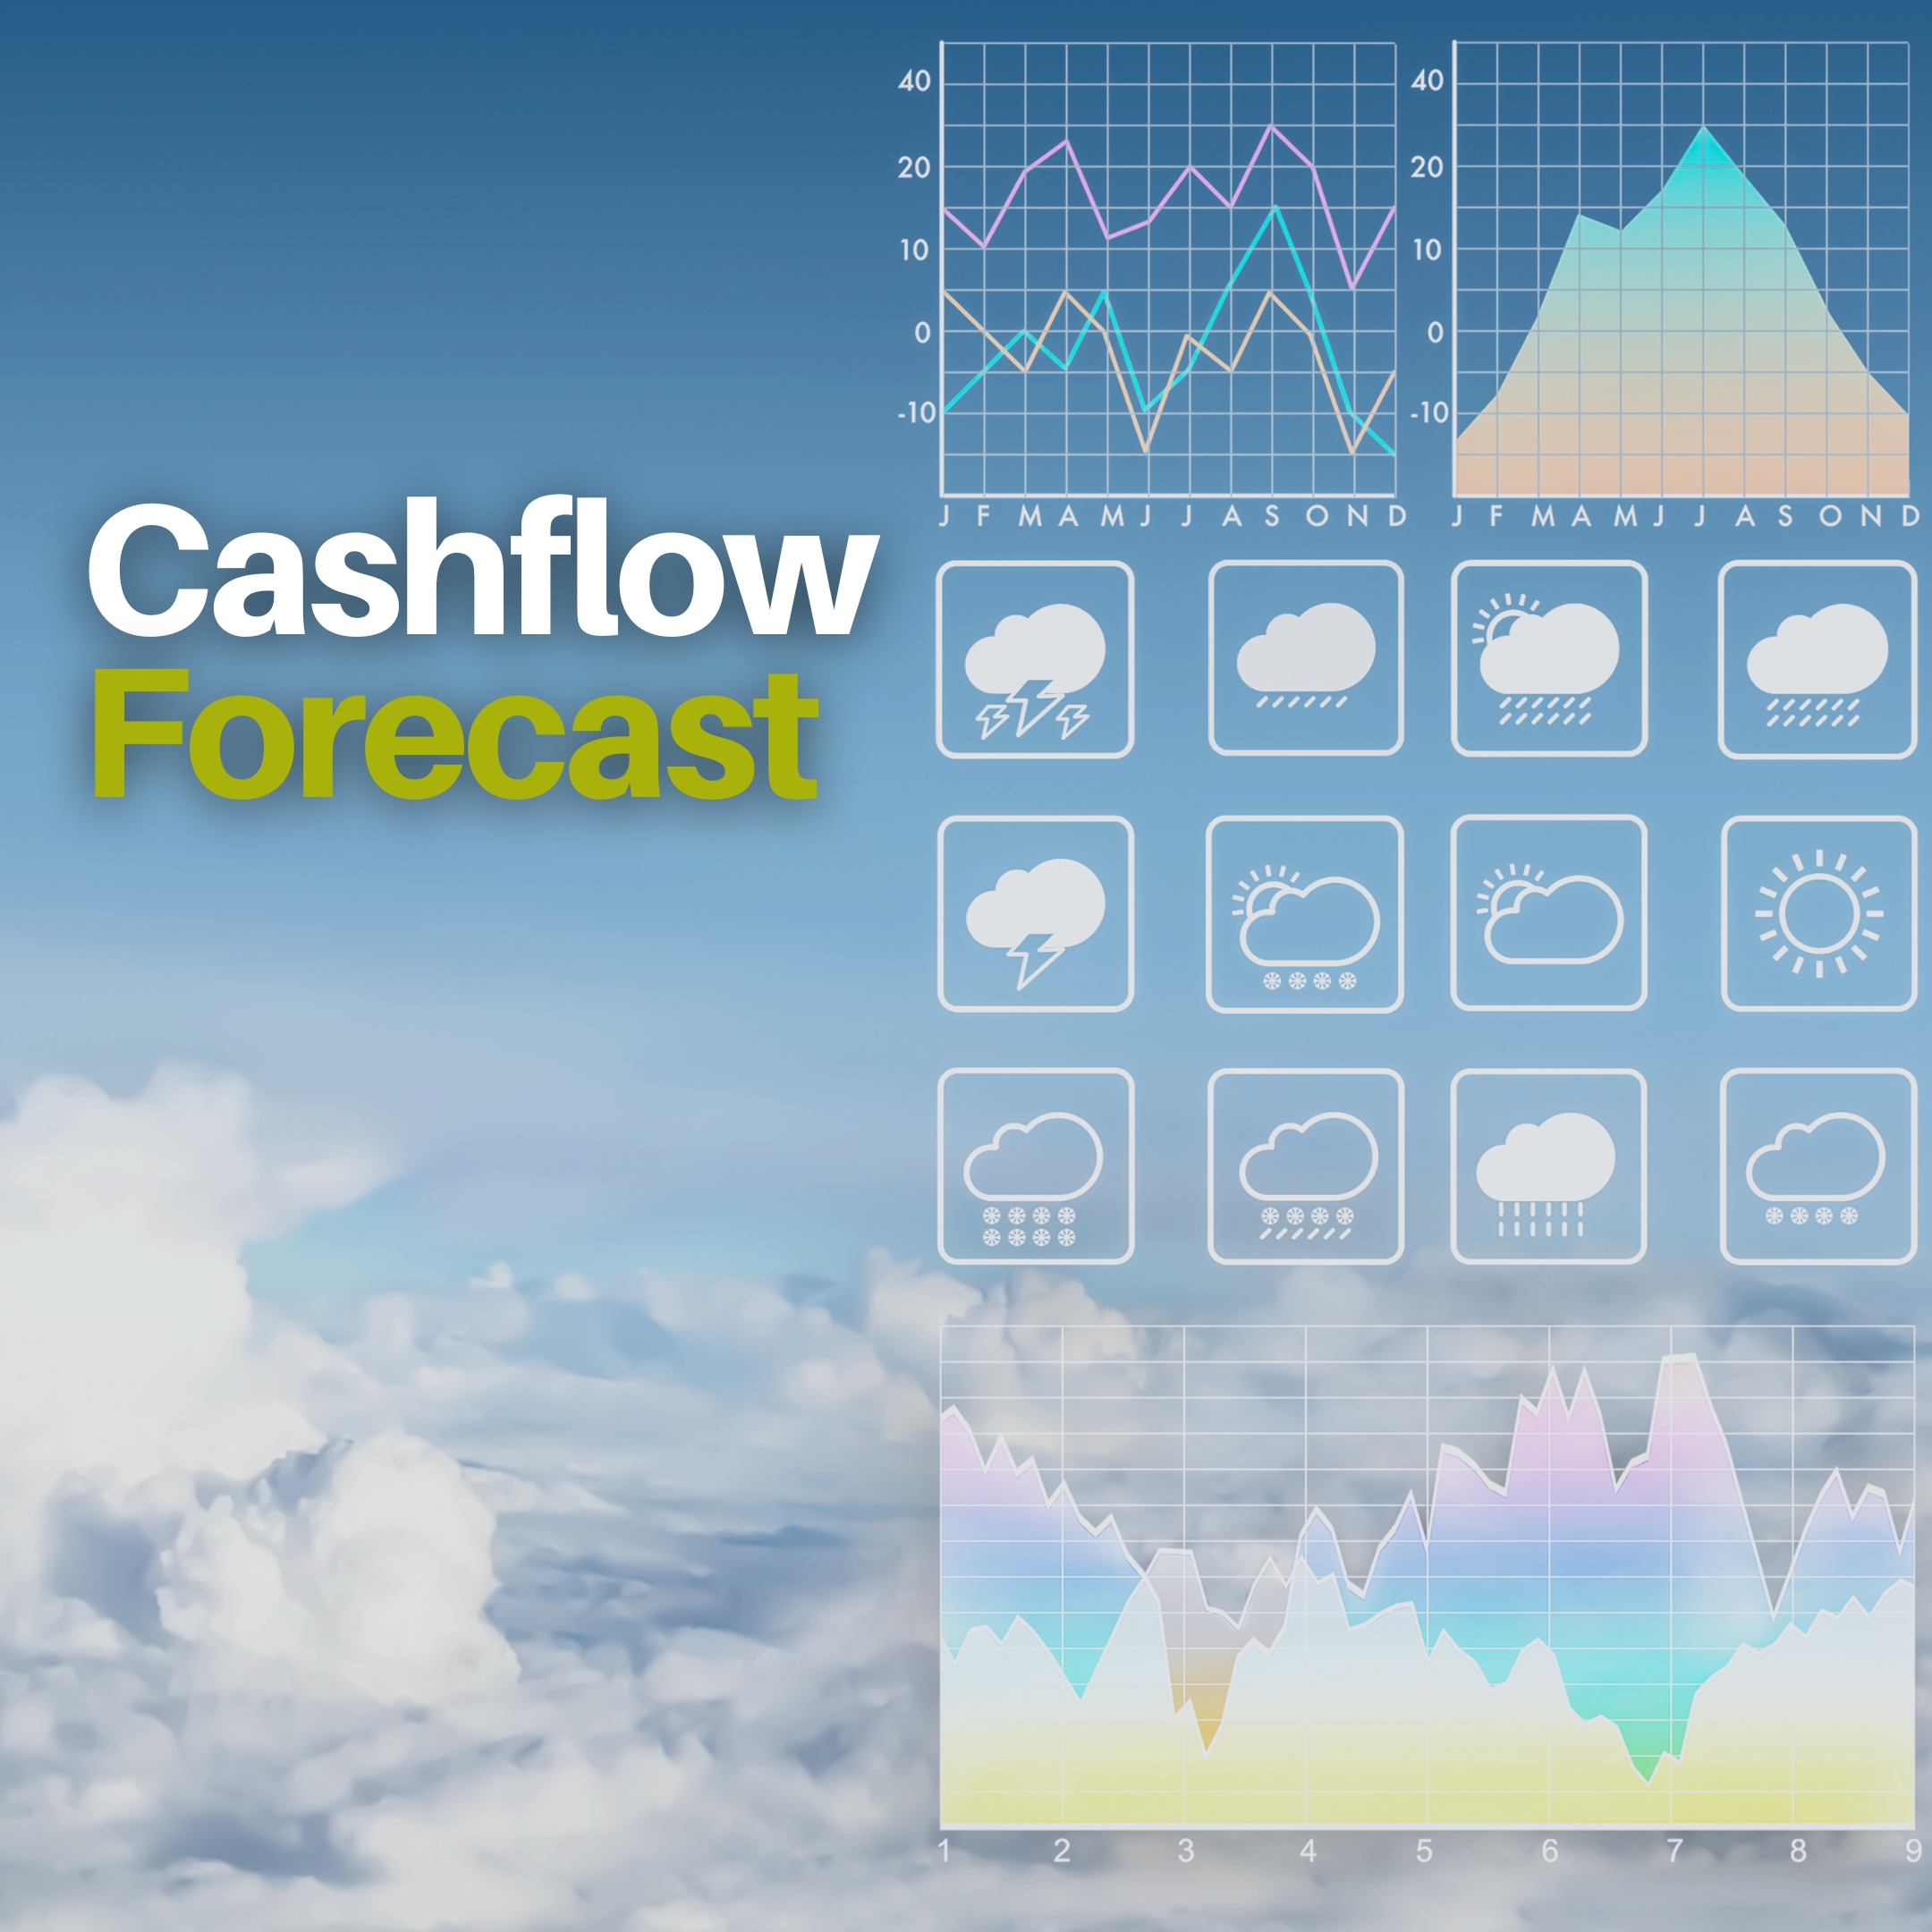 Cashflow forecast